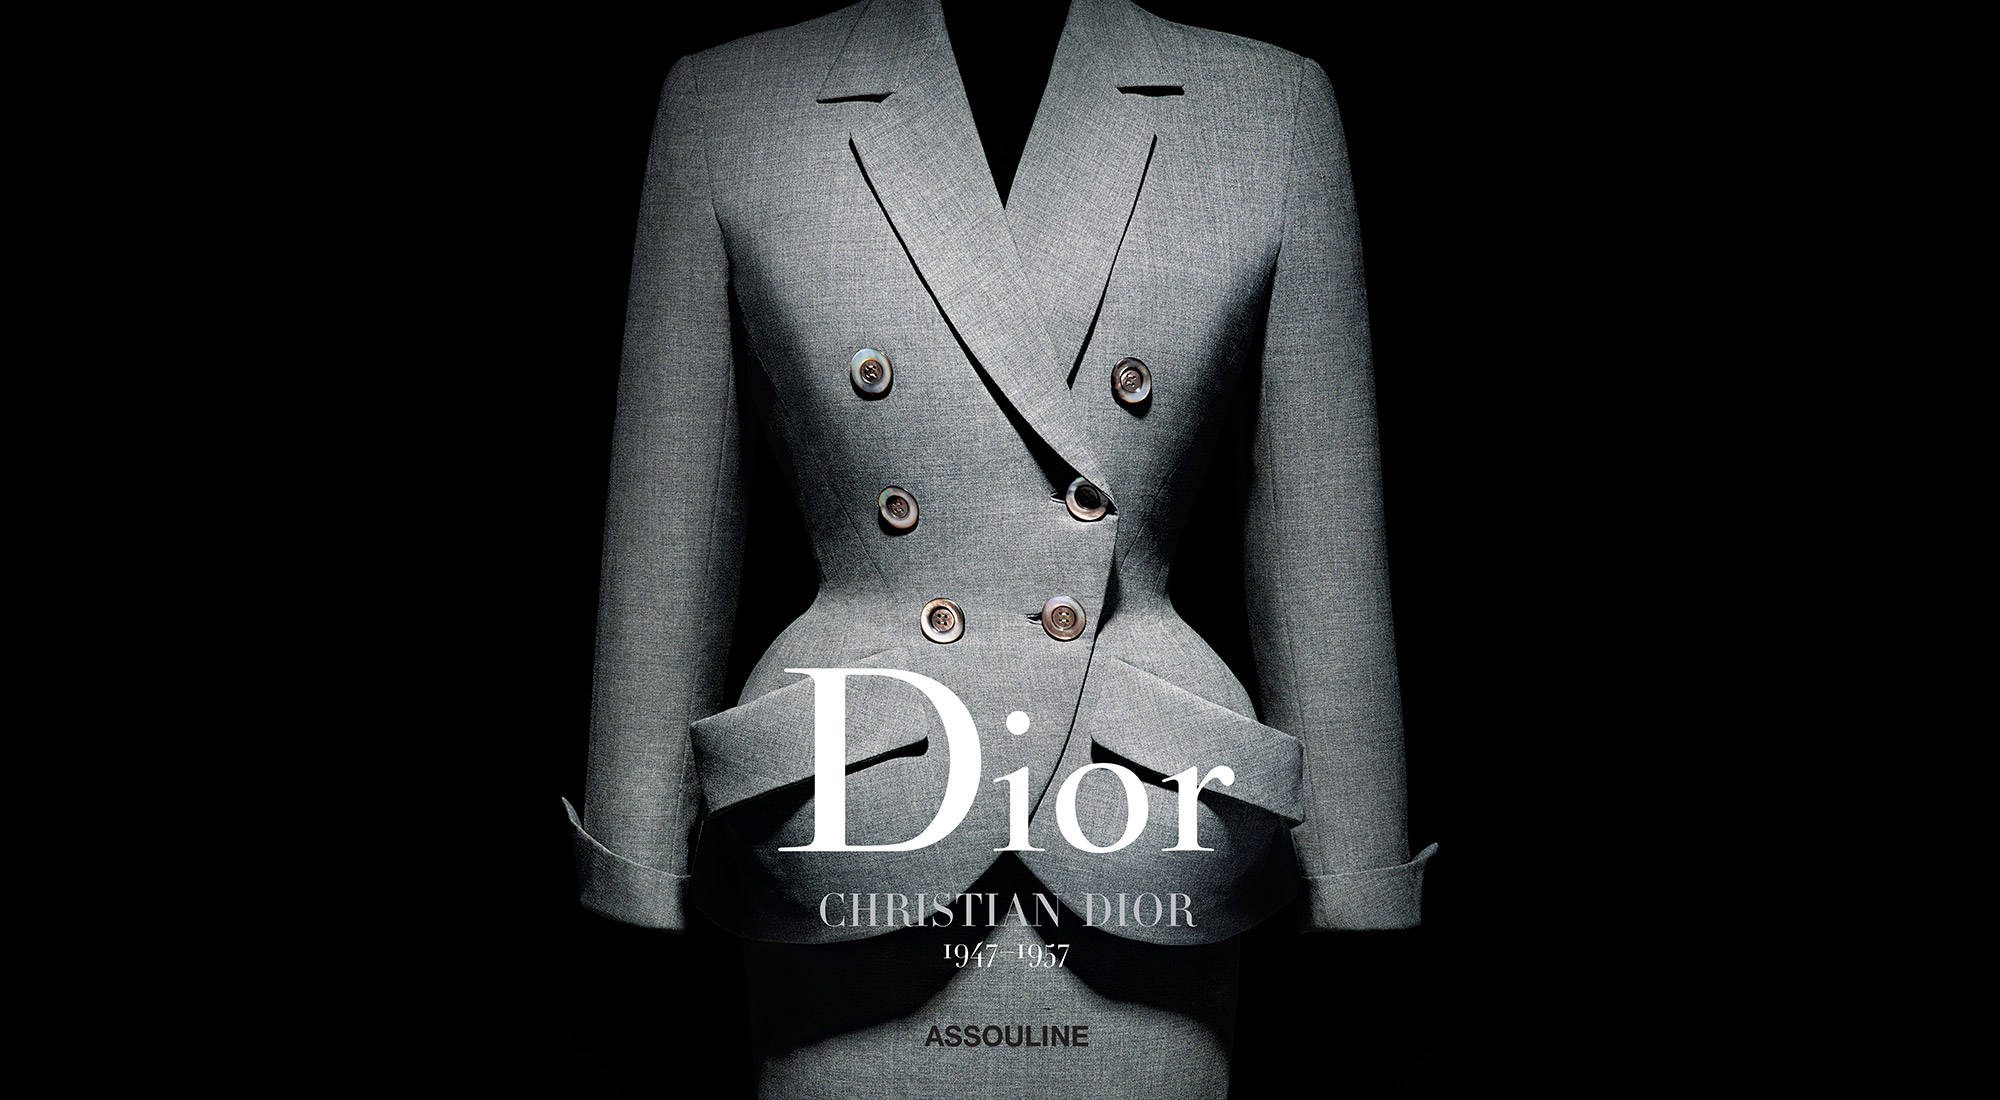 Dior by Christian Dior on vickiarcher.com